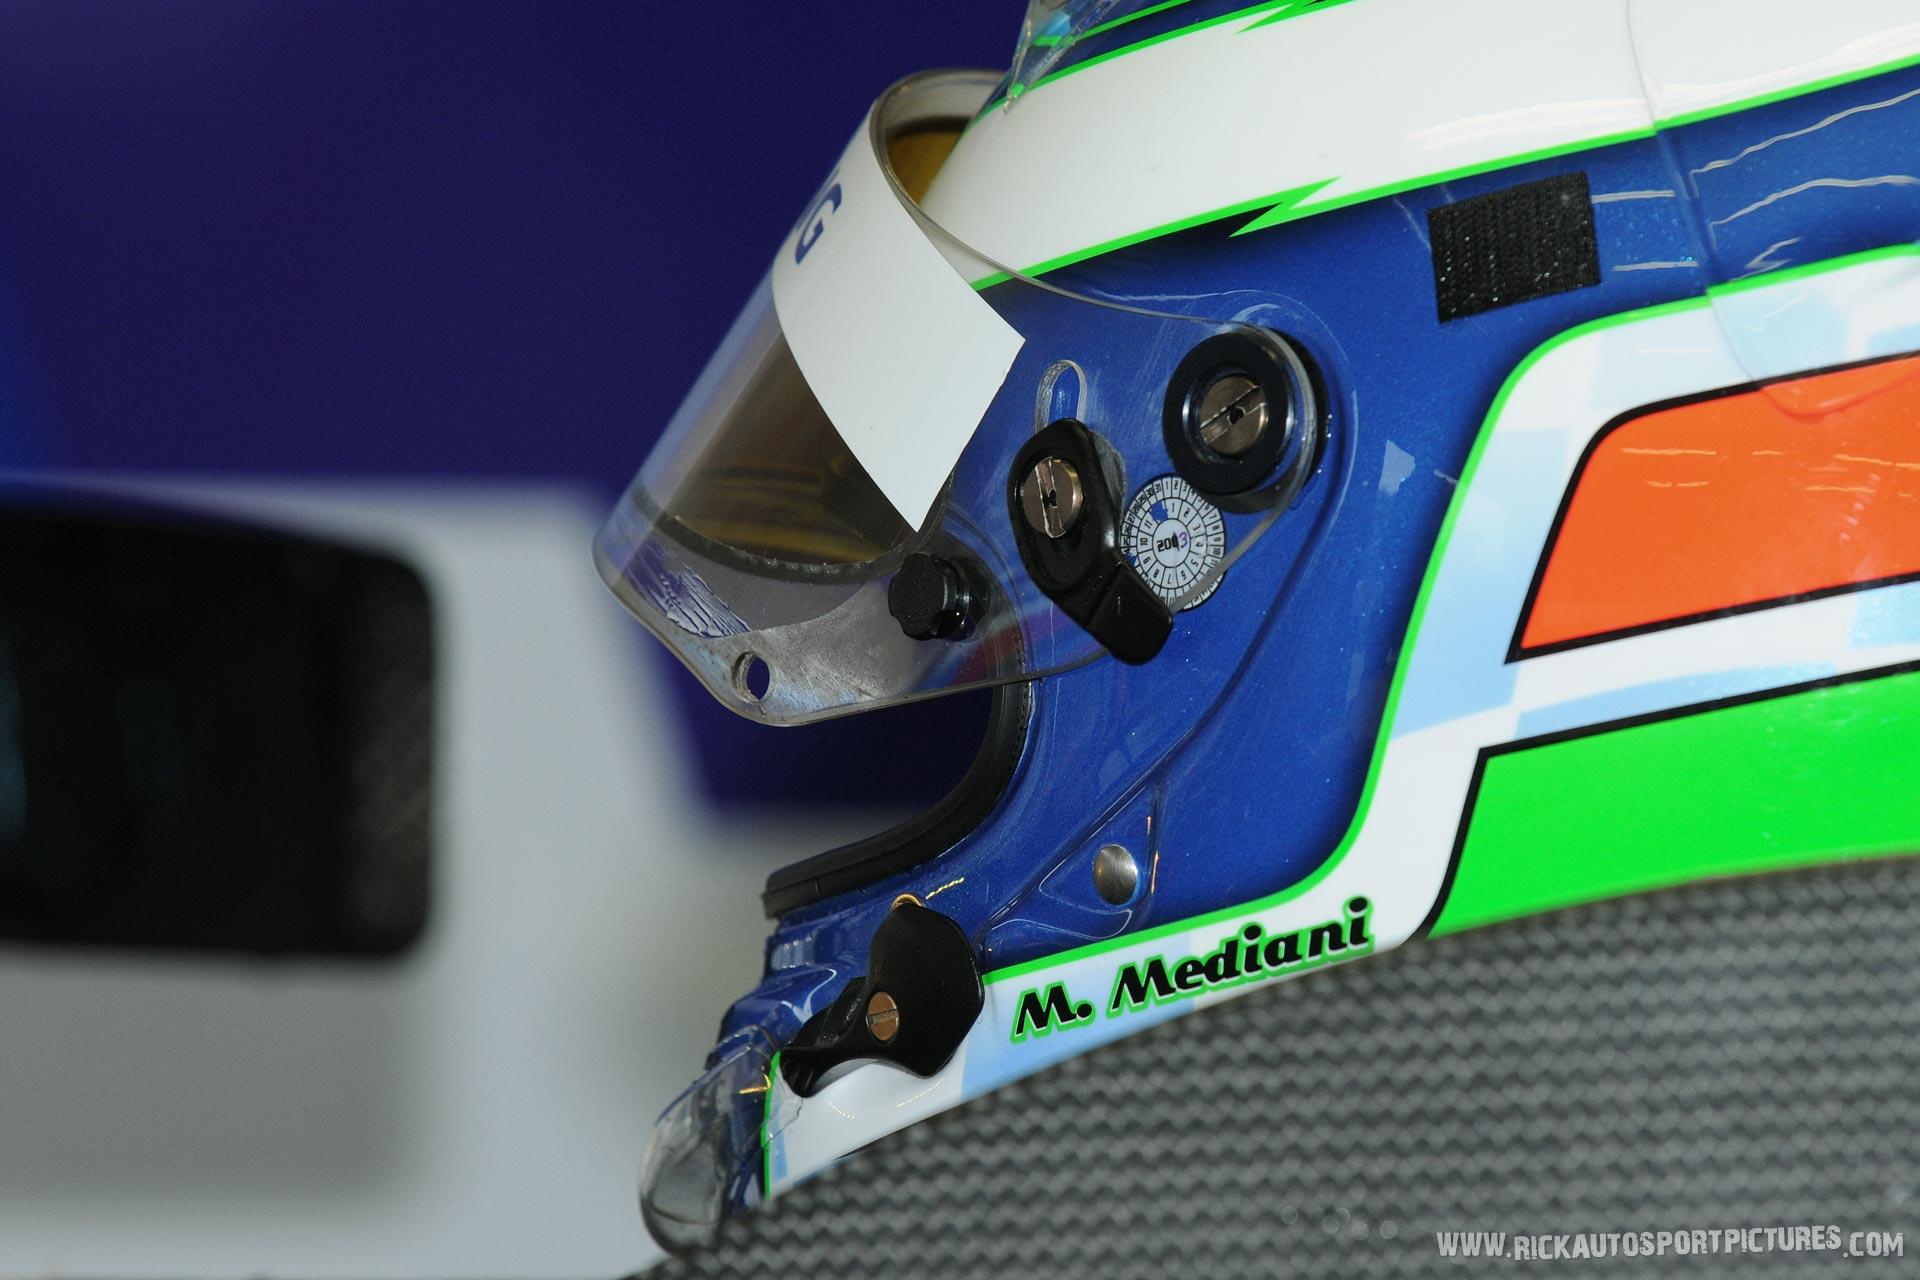 Maurizio Mediani casco helmet 2014